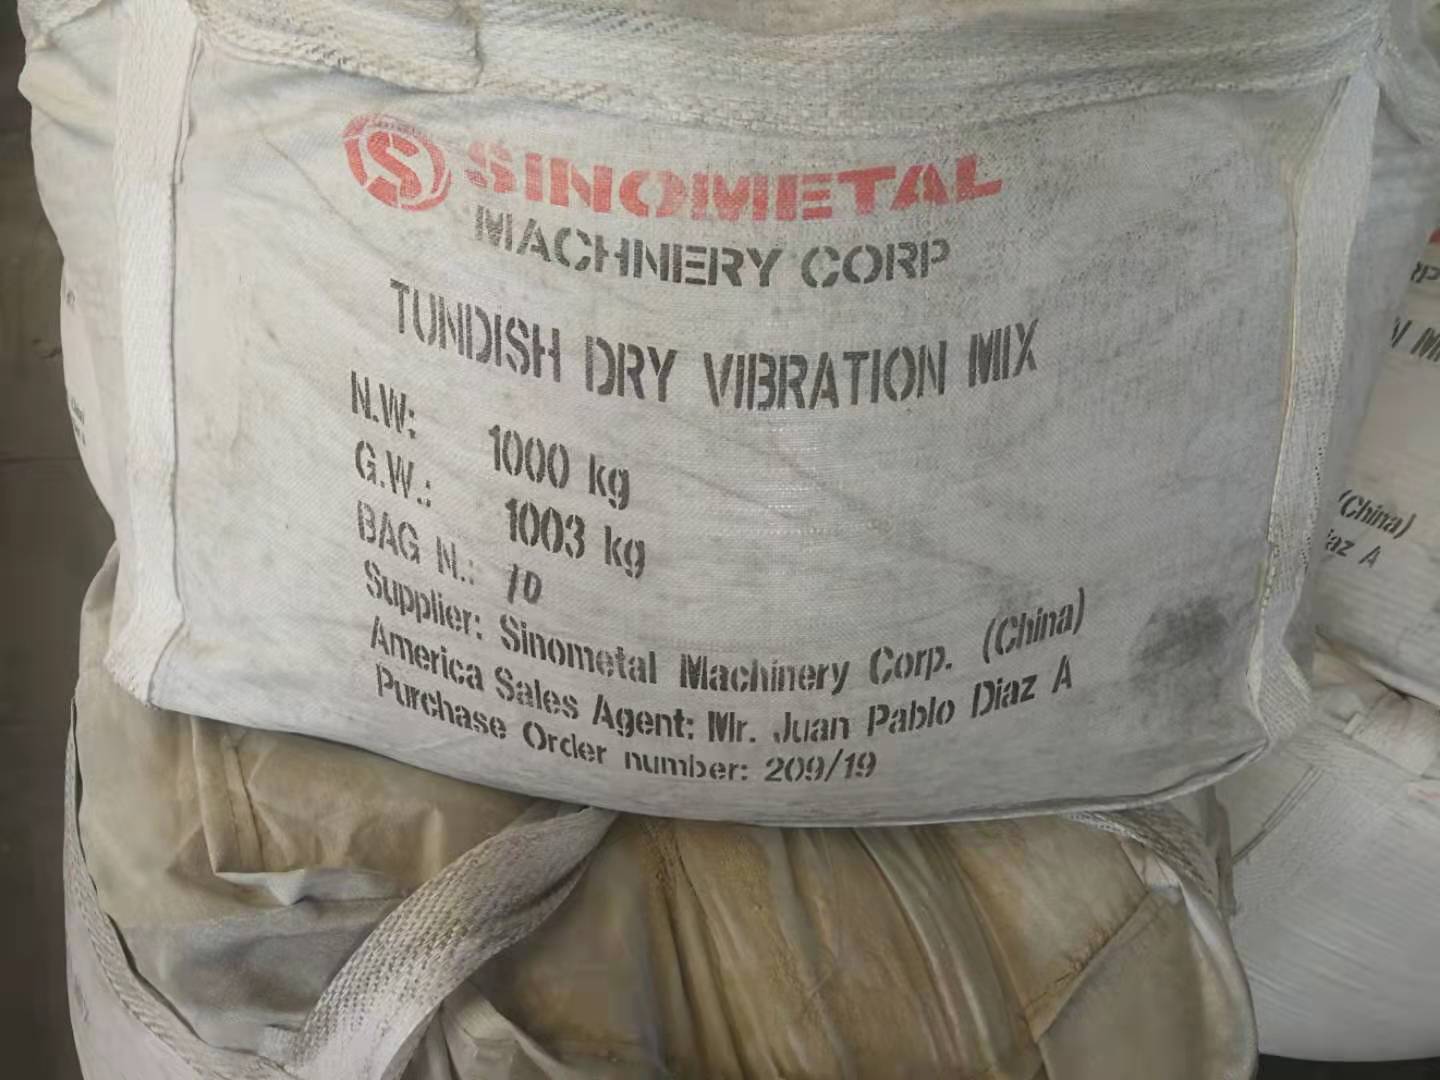 Tundish Dry Vibration Mix